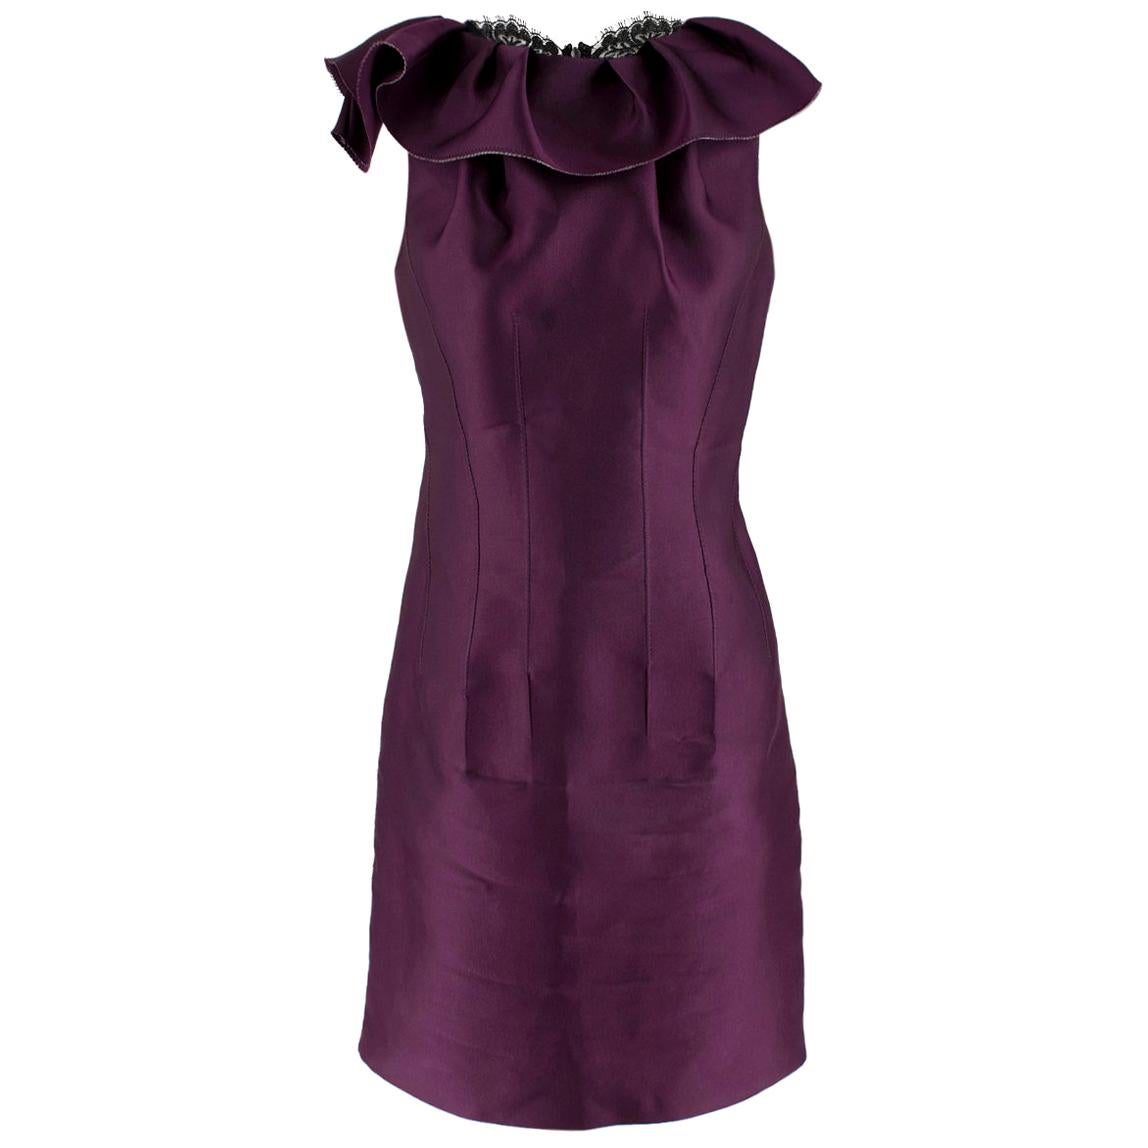 Lanvin Purple Ruffled Silk Blend Duchesse & Lace Dress estimated size M